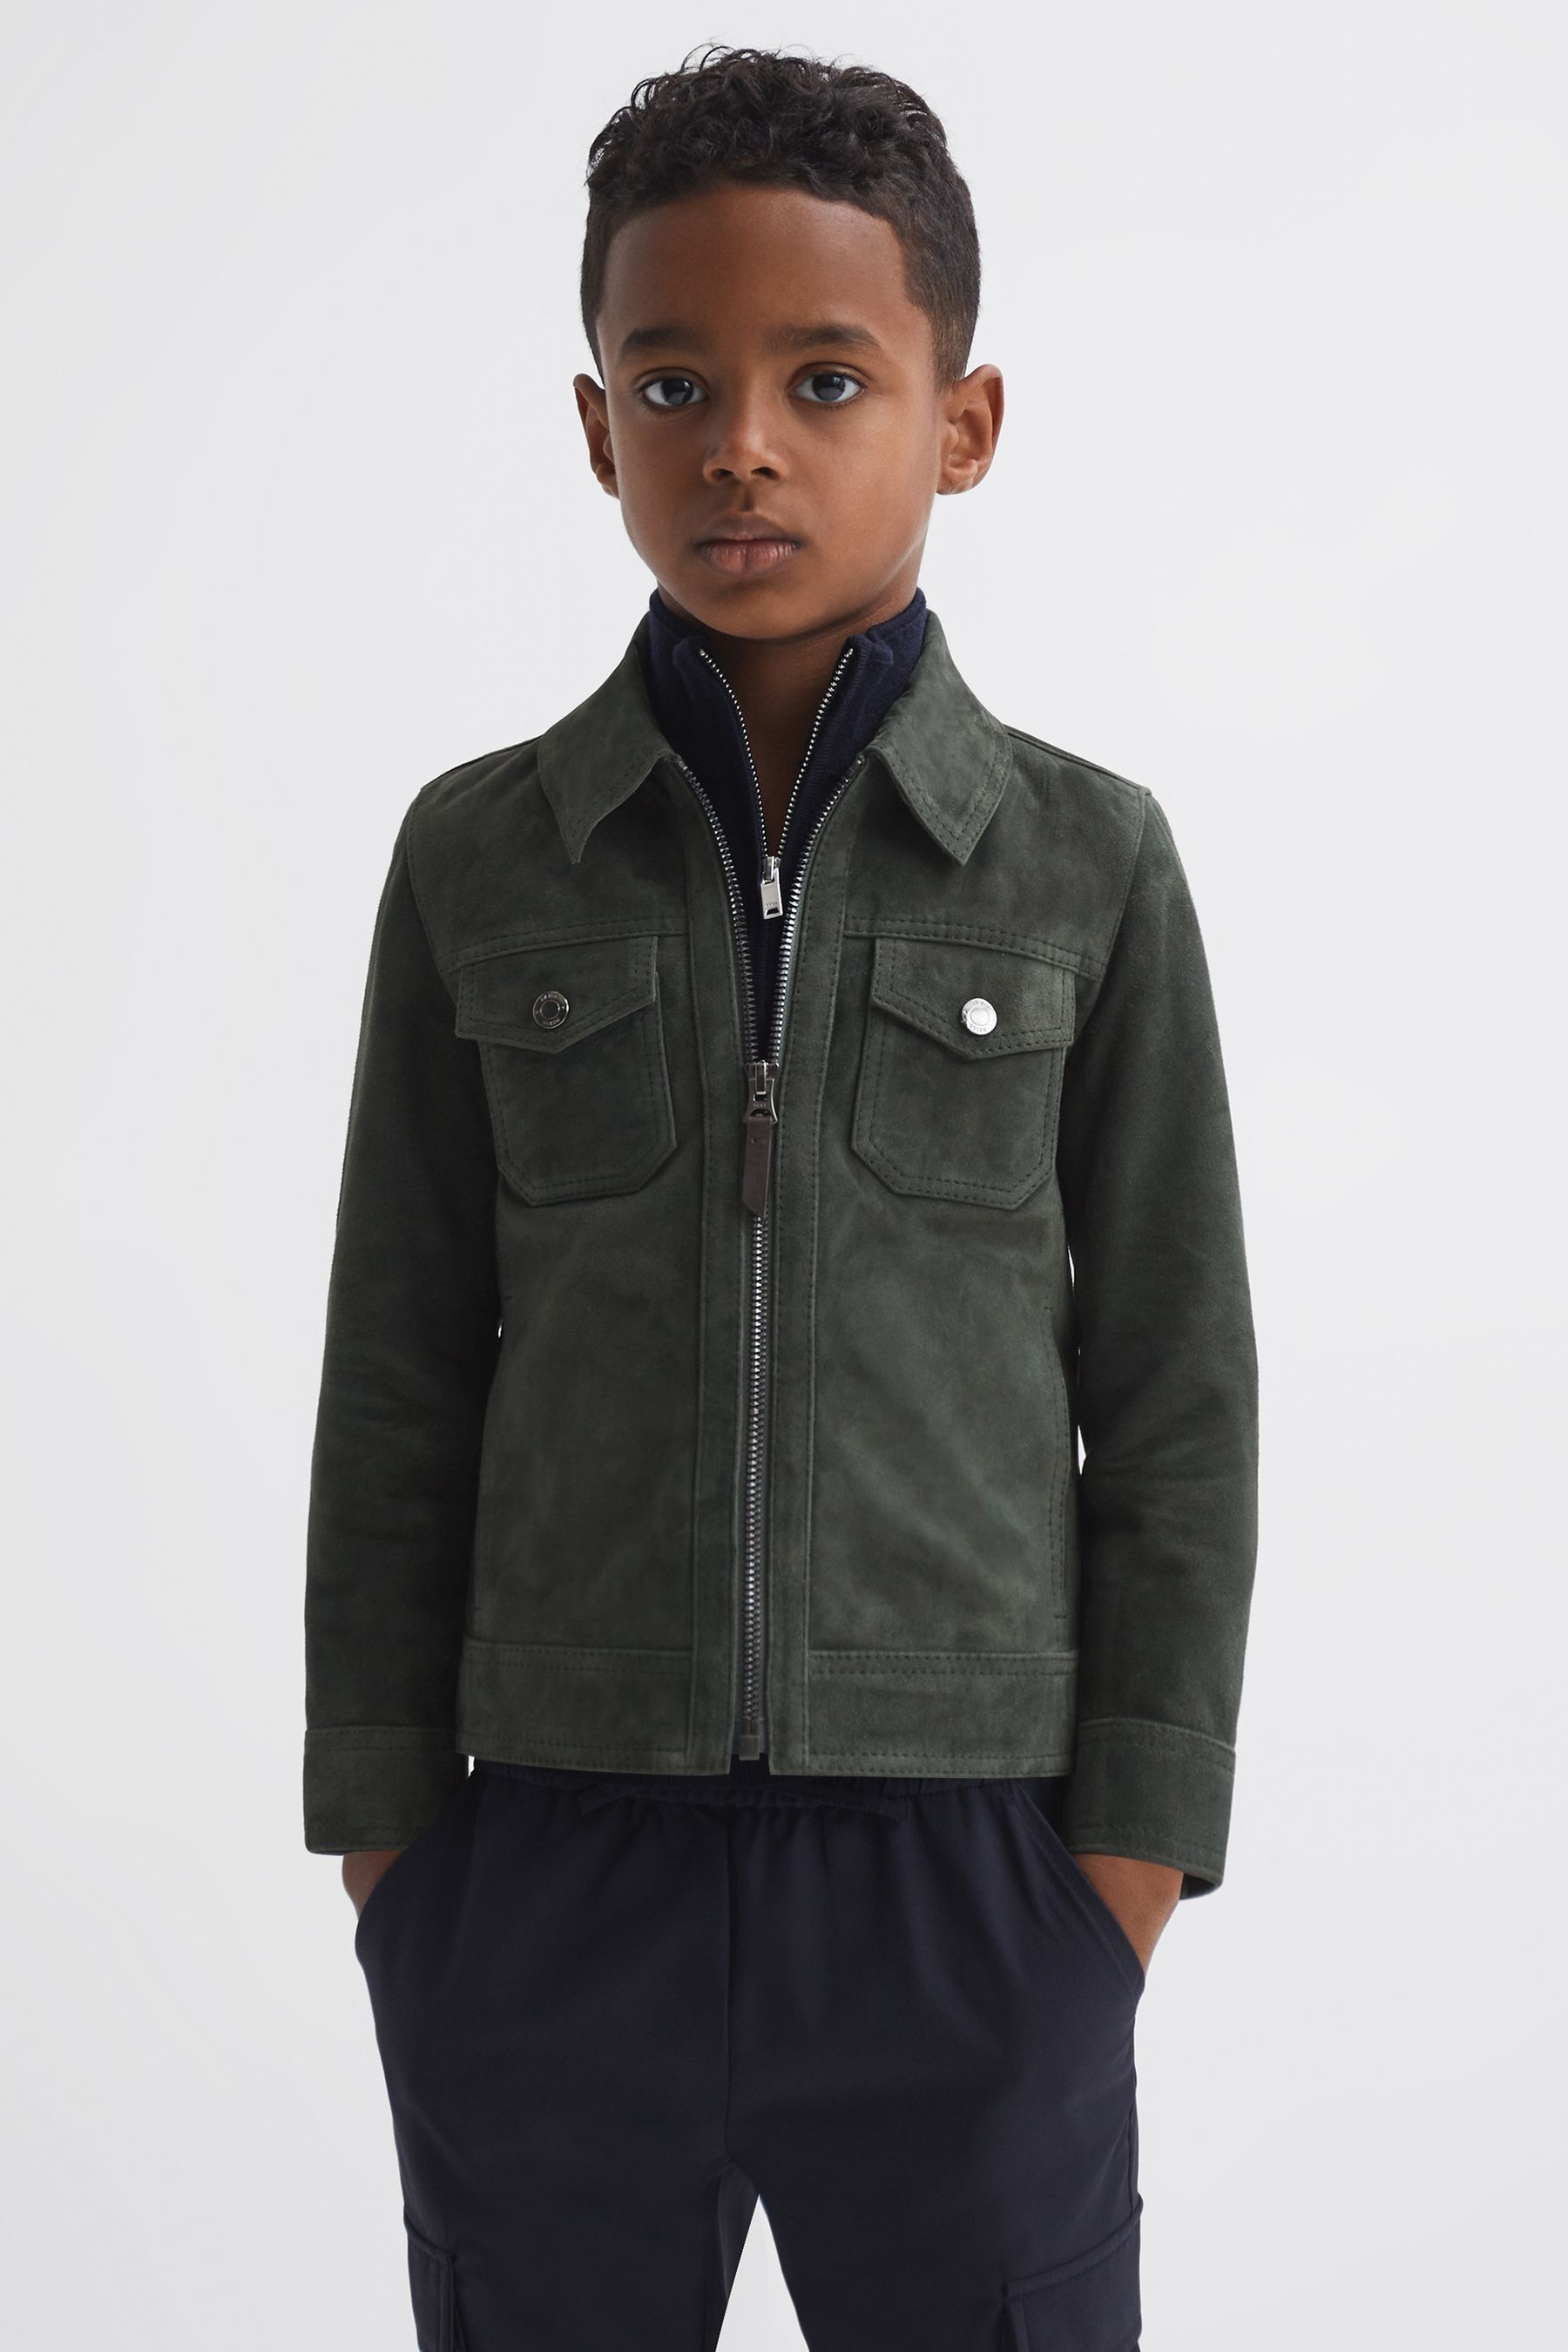 Reiss Kids' Pike - Forest Green Junior Suede Zip Through Jacket, 6 - 7 Years